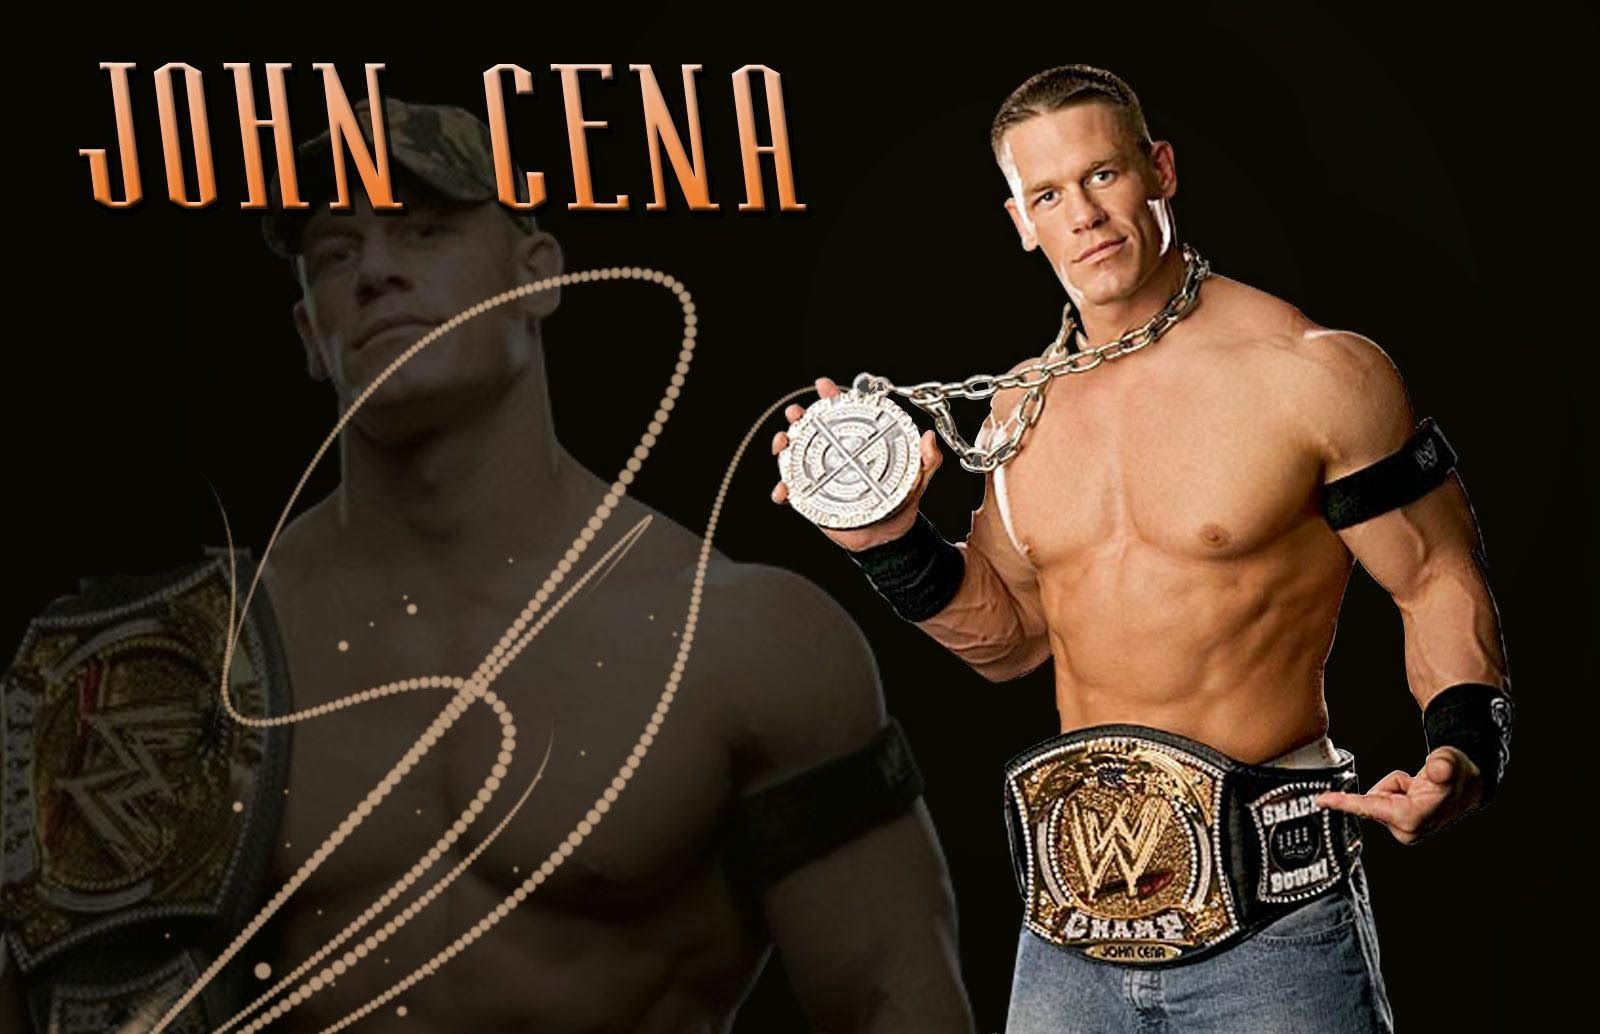 WWE HD WALLPAPER FREE DOWNLOAD: John Cena HD Wallpaper